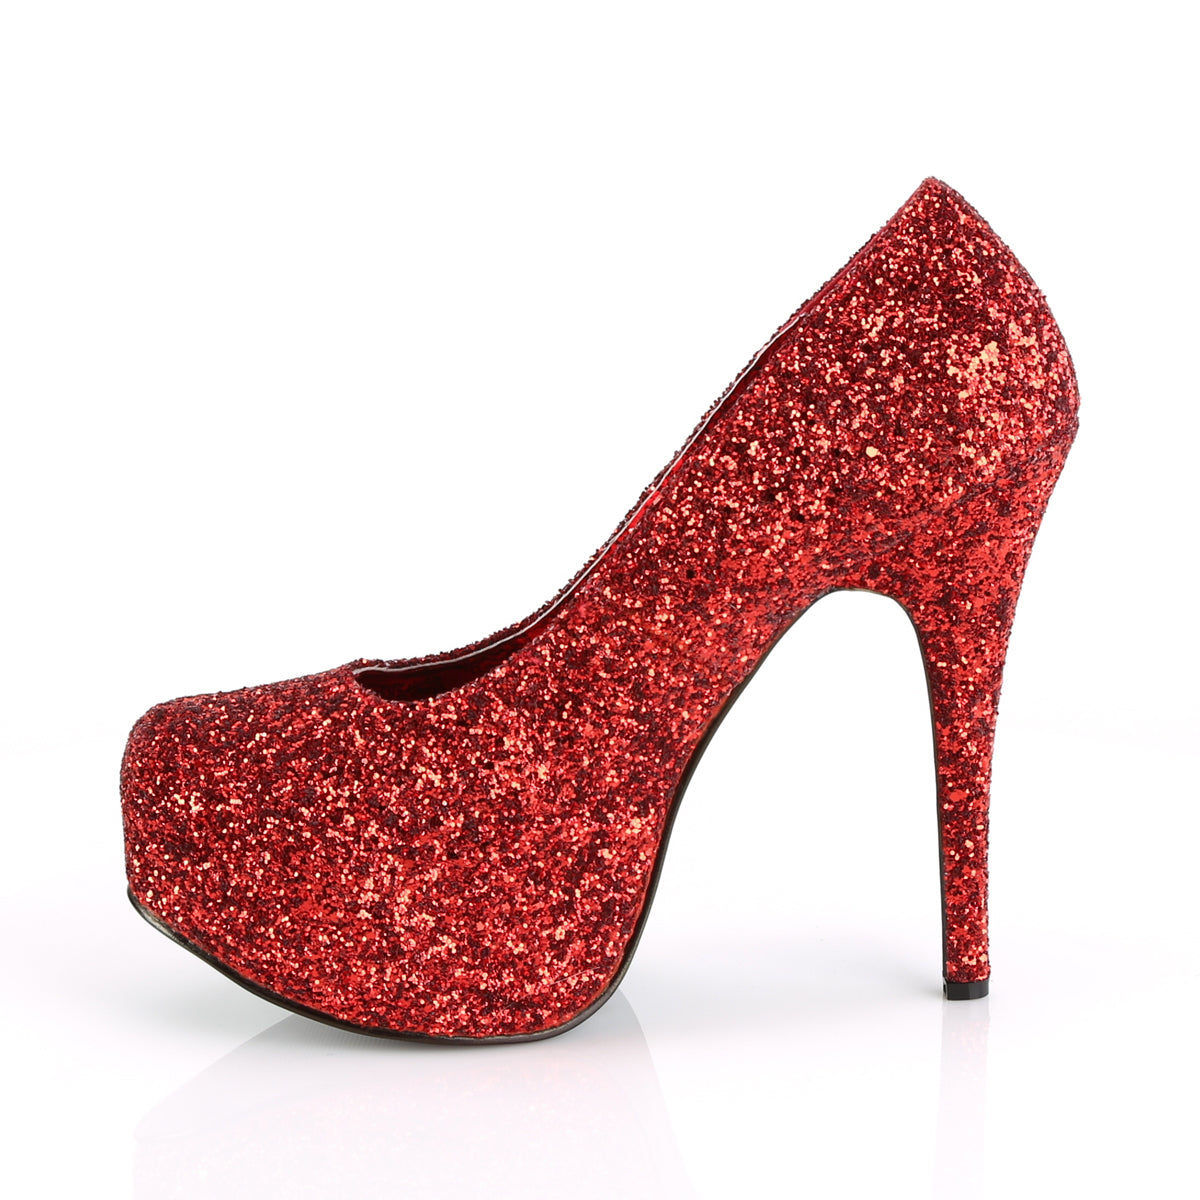 TEEZE-06GW Pink Label 6 Inch Heel Red Glitter Platform Shoes-Pleaser Pink Label- Drag Queen Shoes